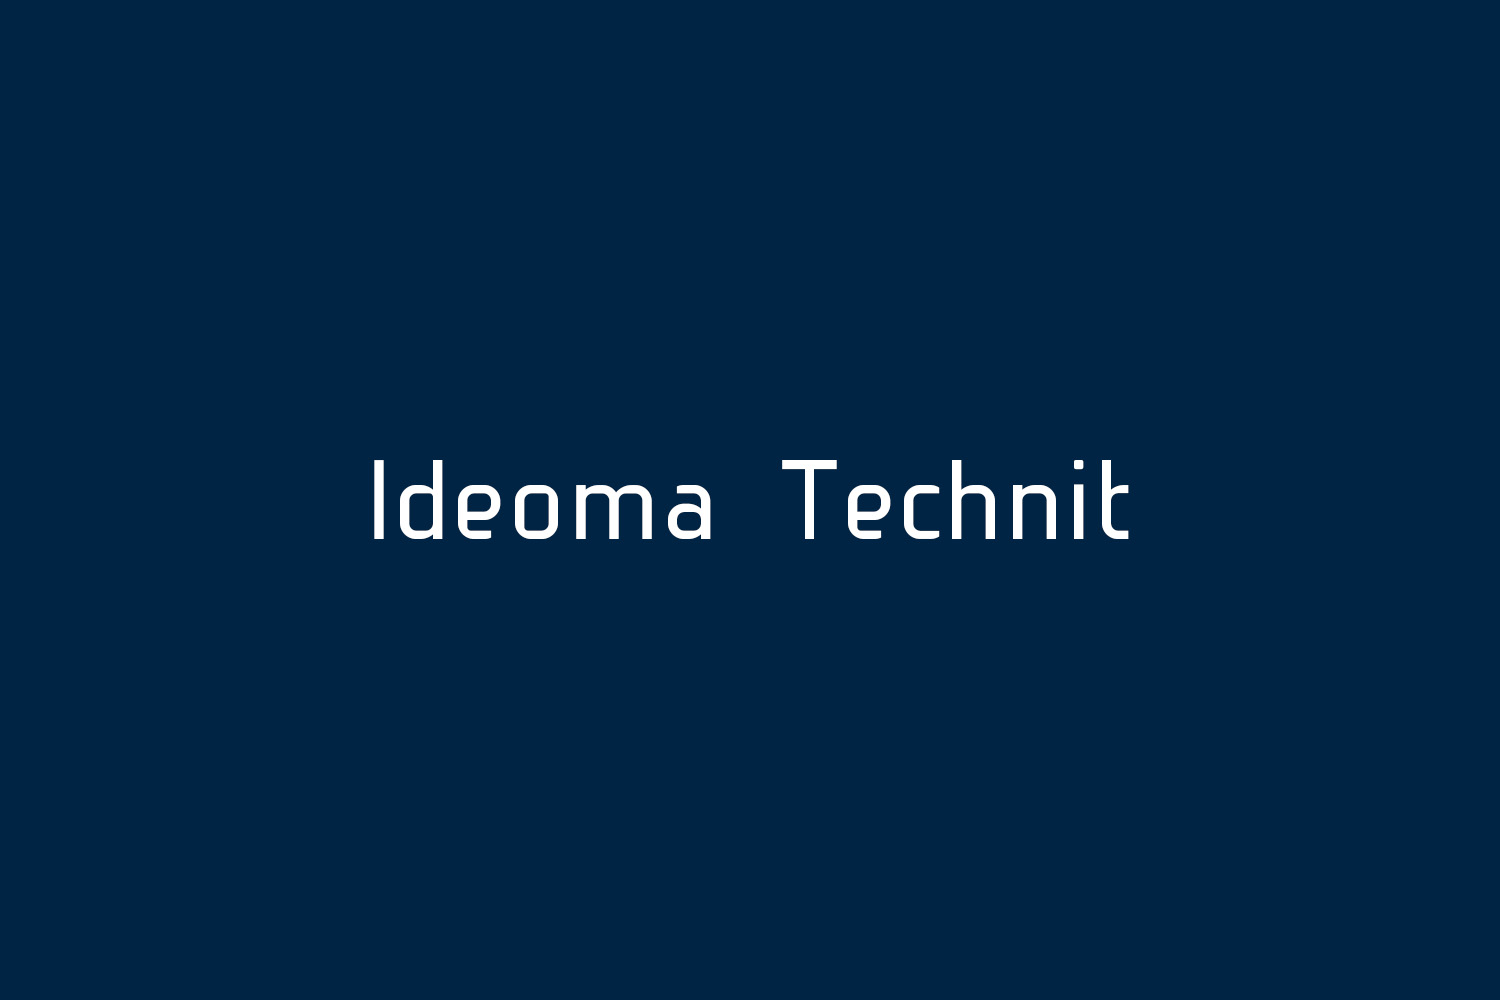 Ideoma Technit Free Font